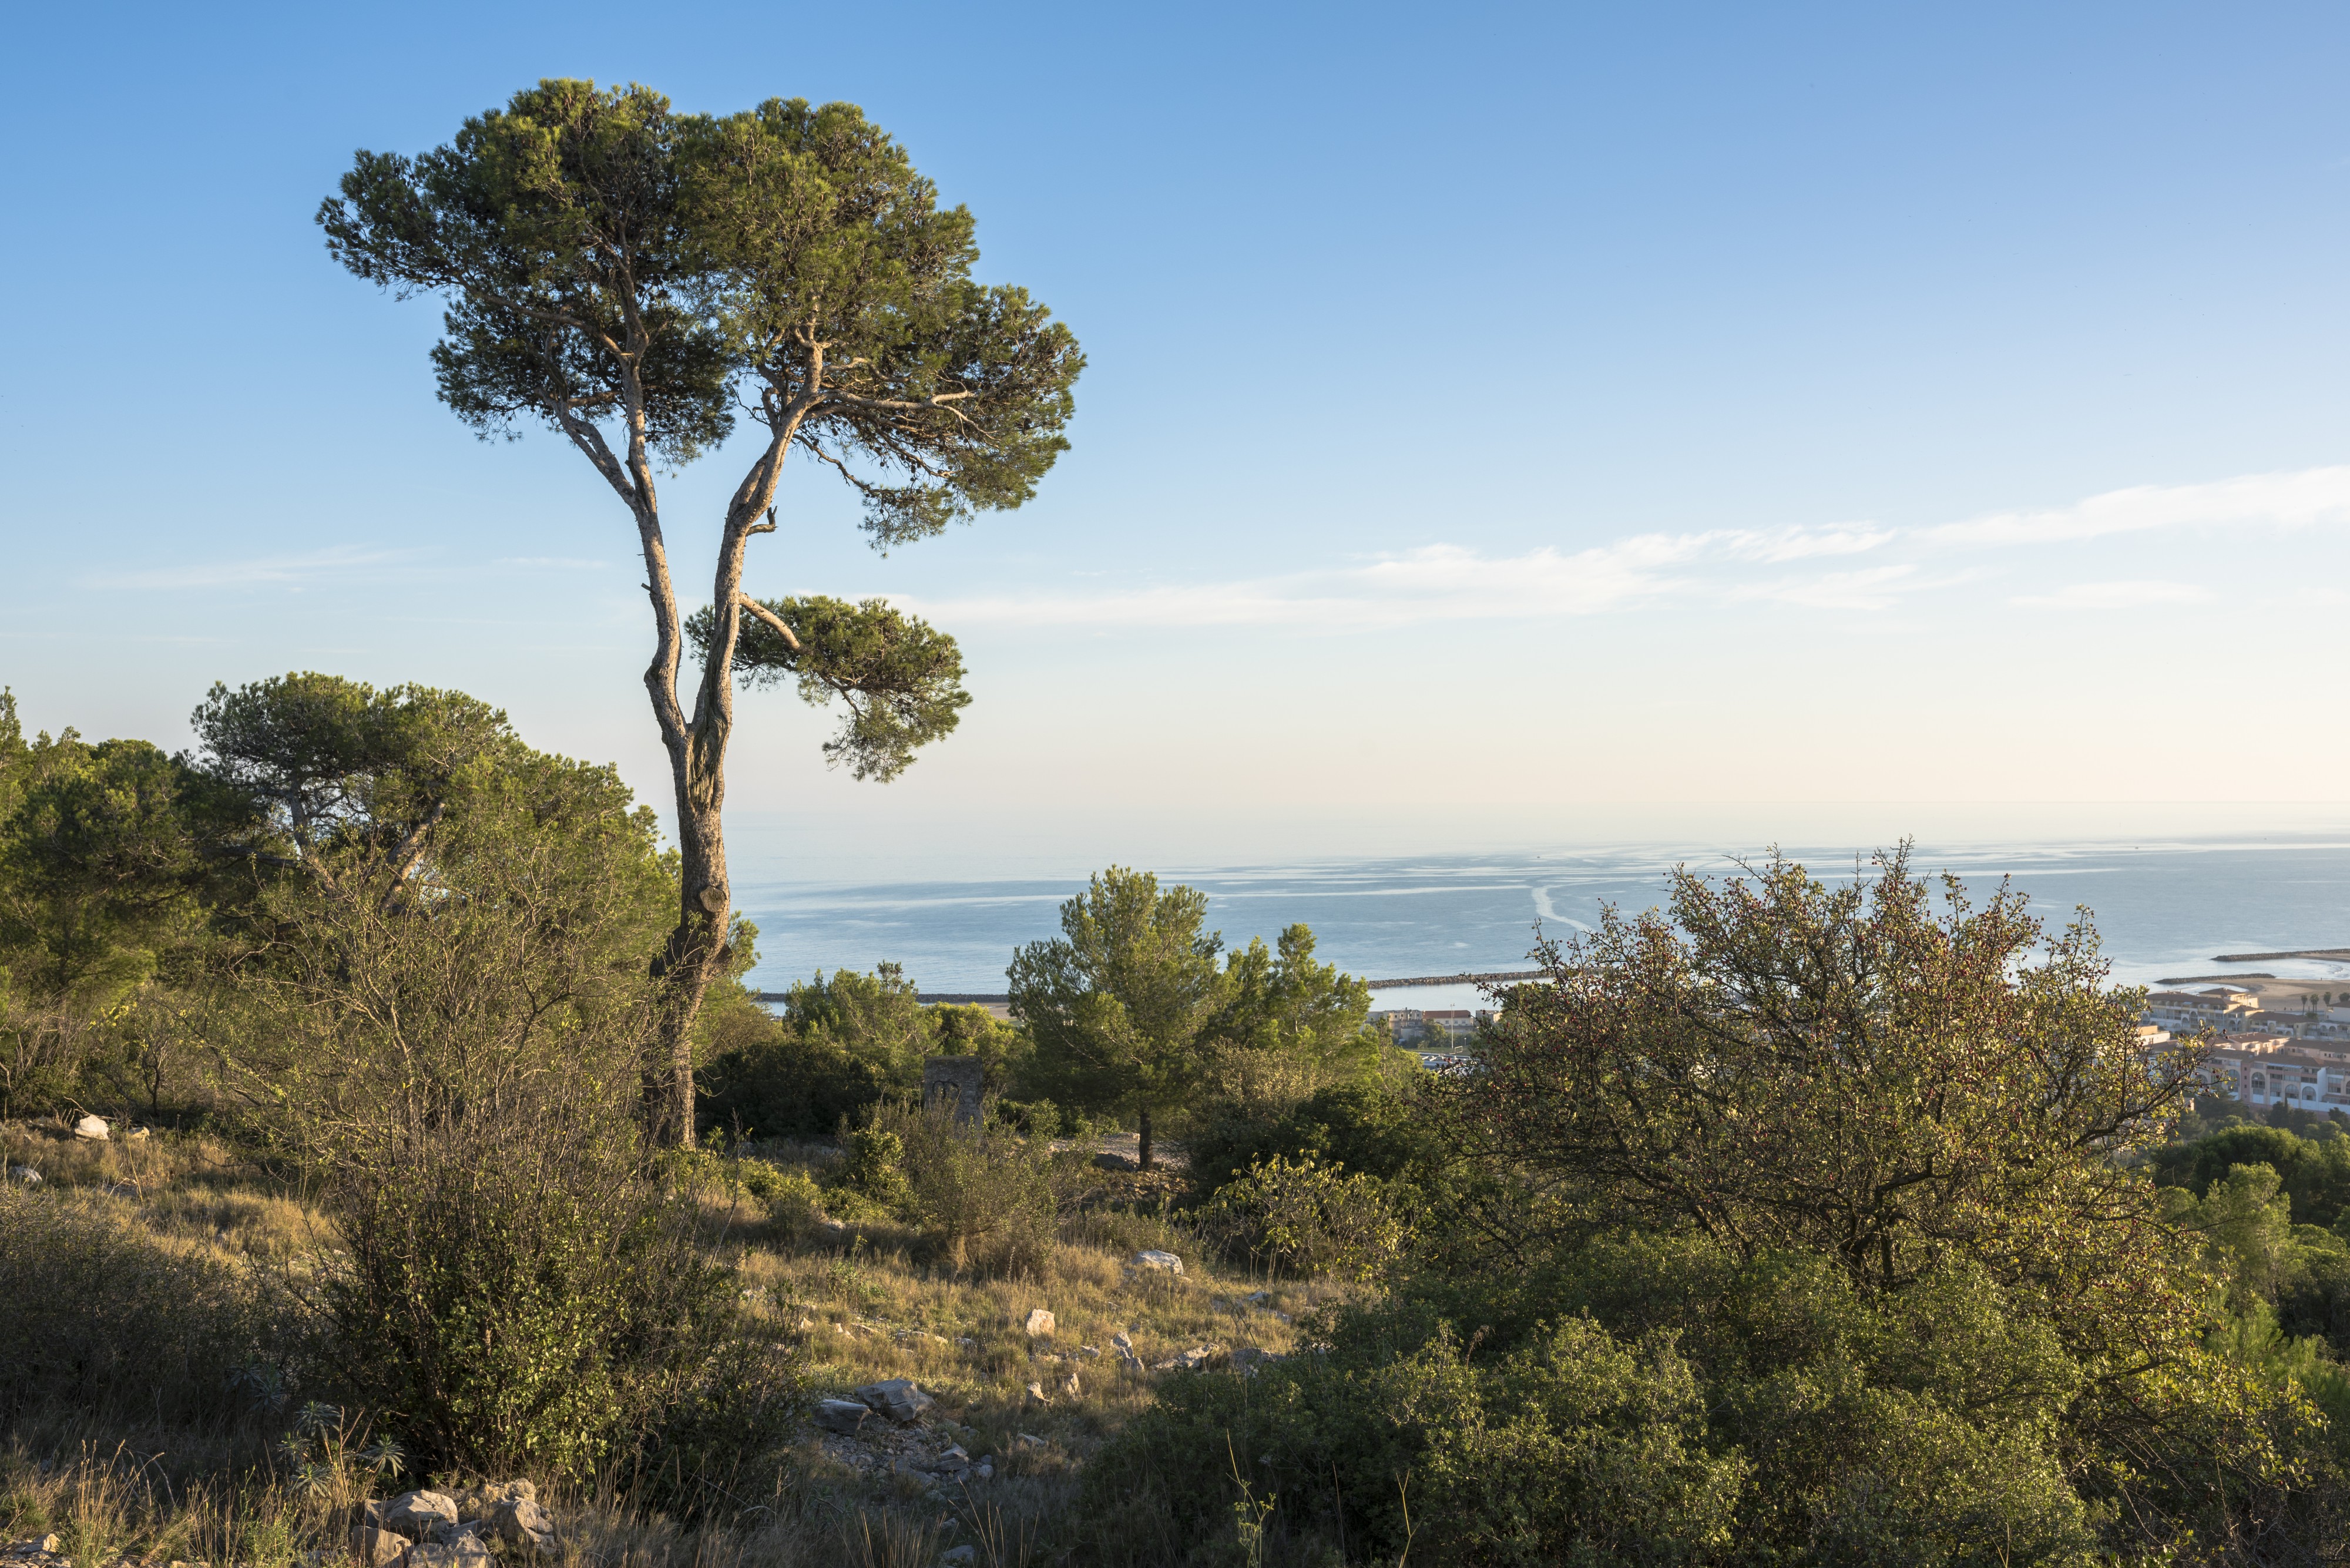 Aleppo Pine in front of the Mediterranean Sea